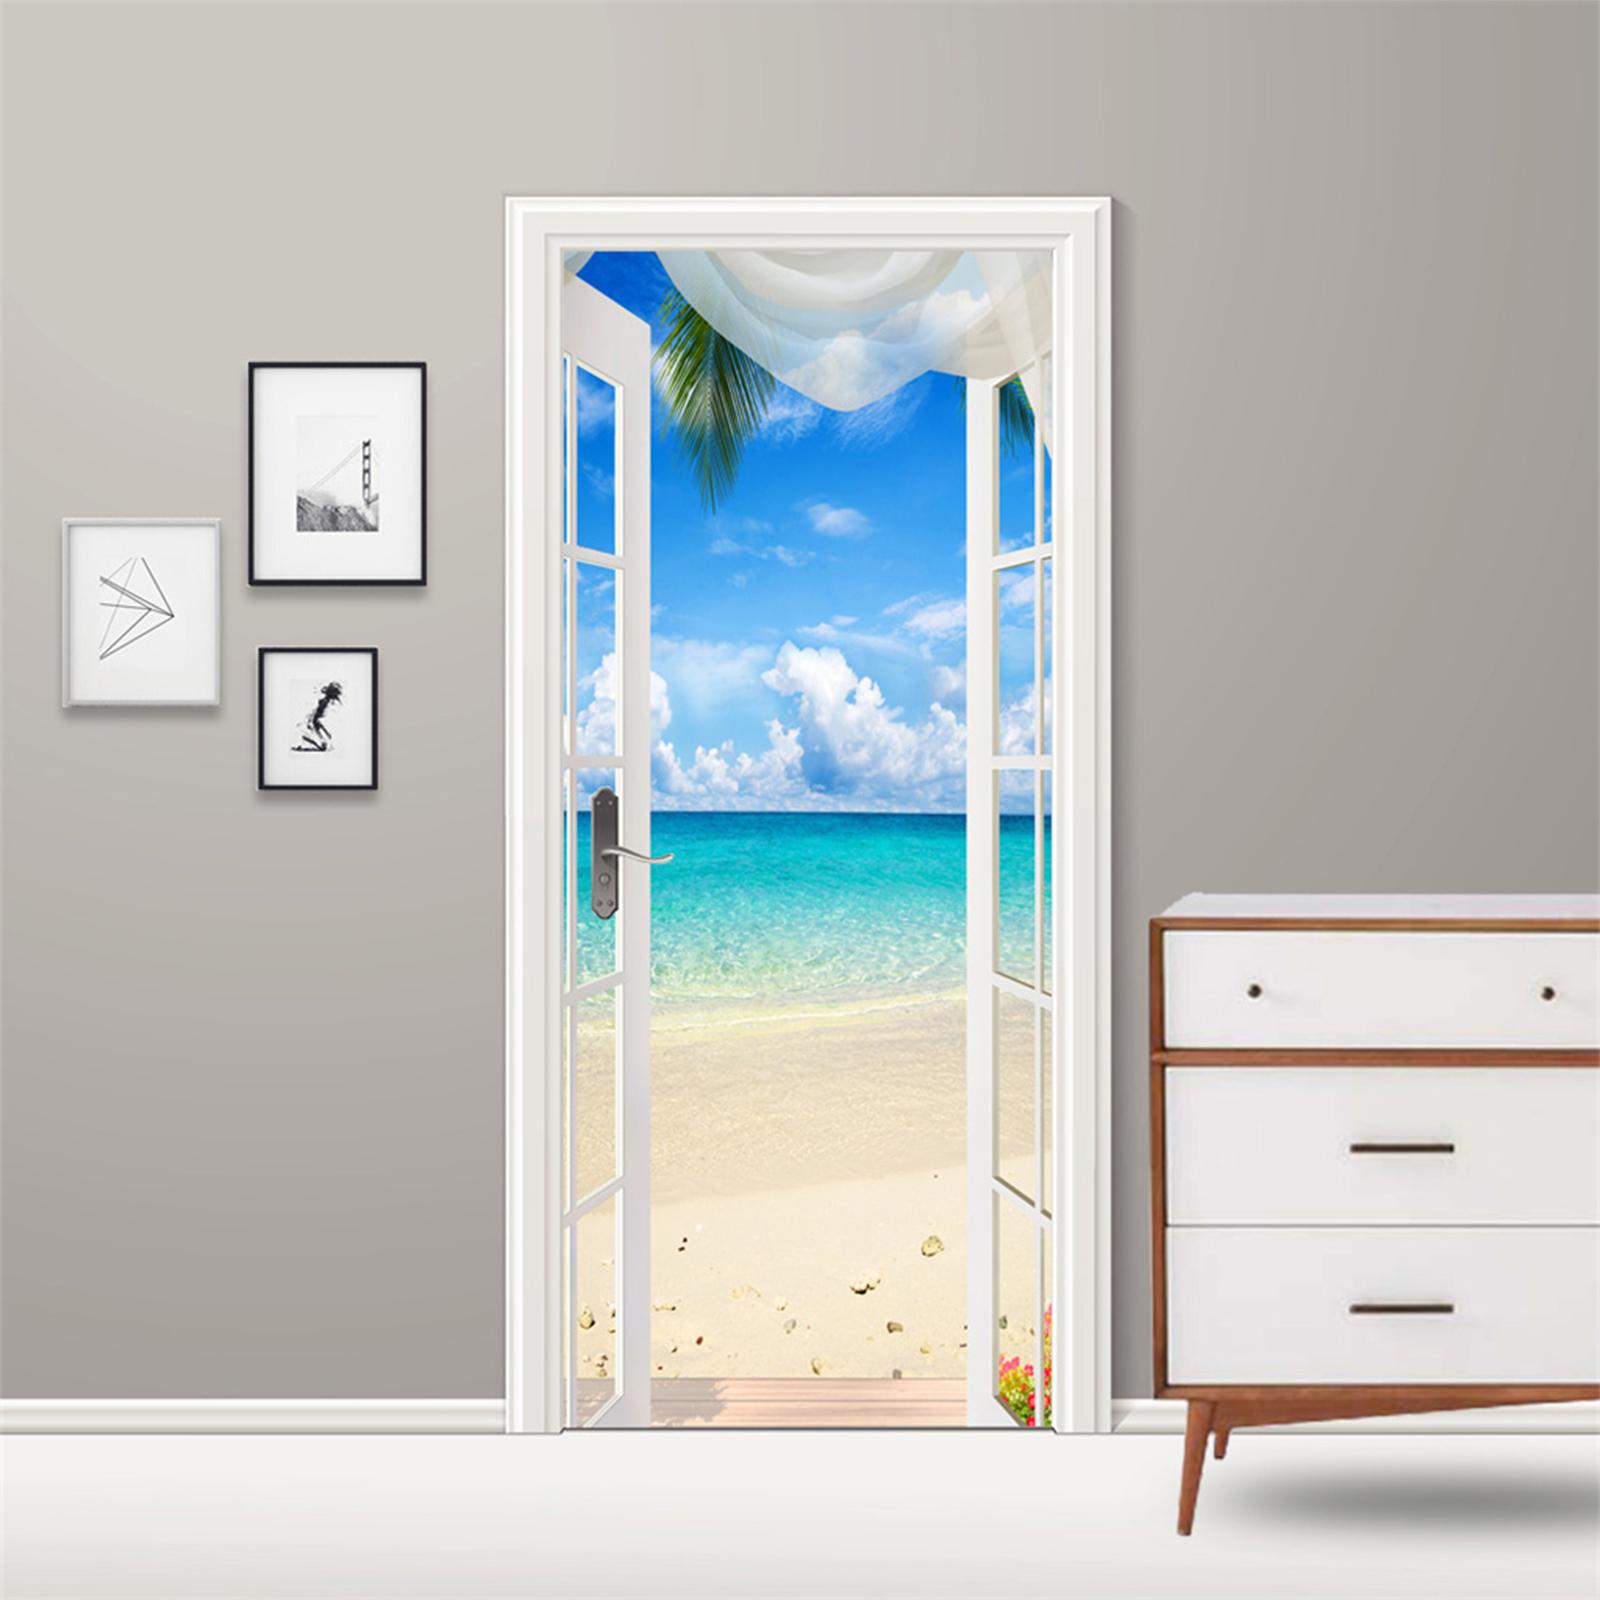 2x 3D Door Wallpaper Wall Art Reusable Posters Waterproof Home Decor style E